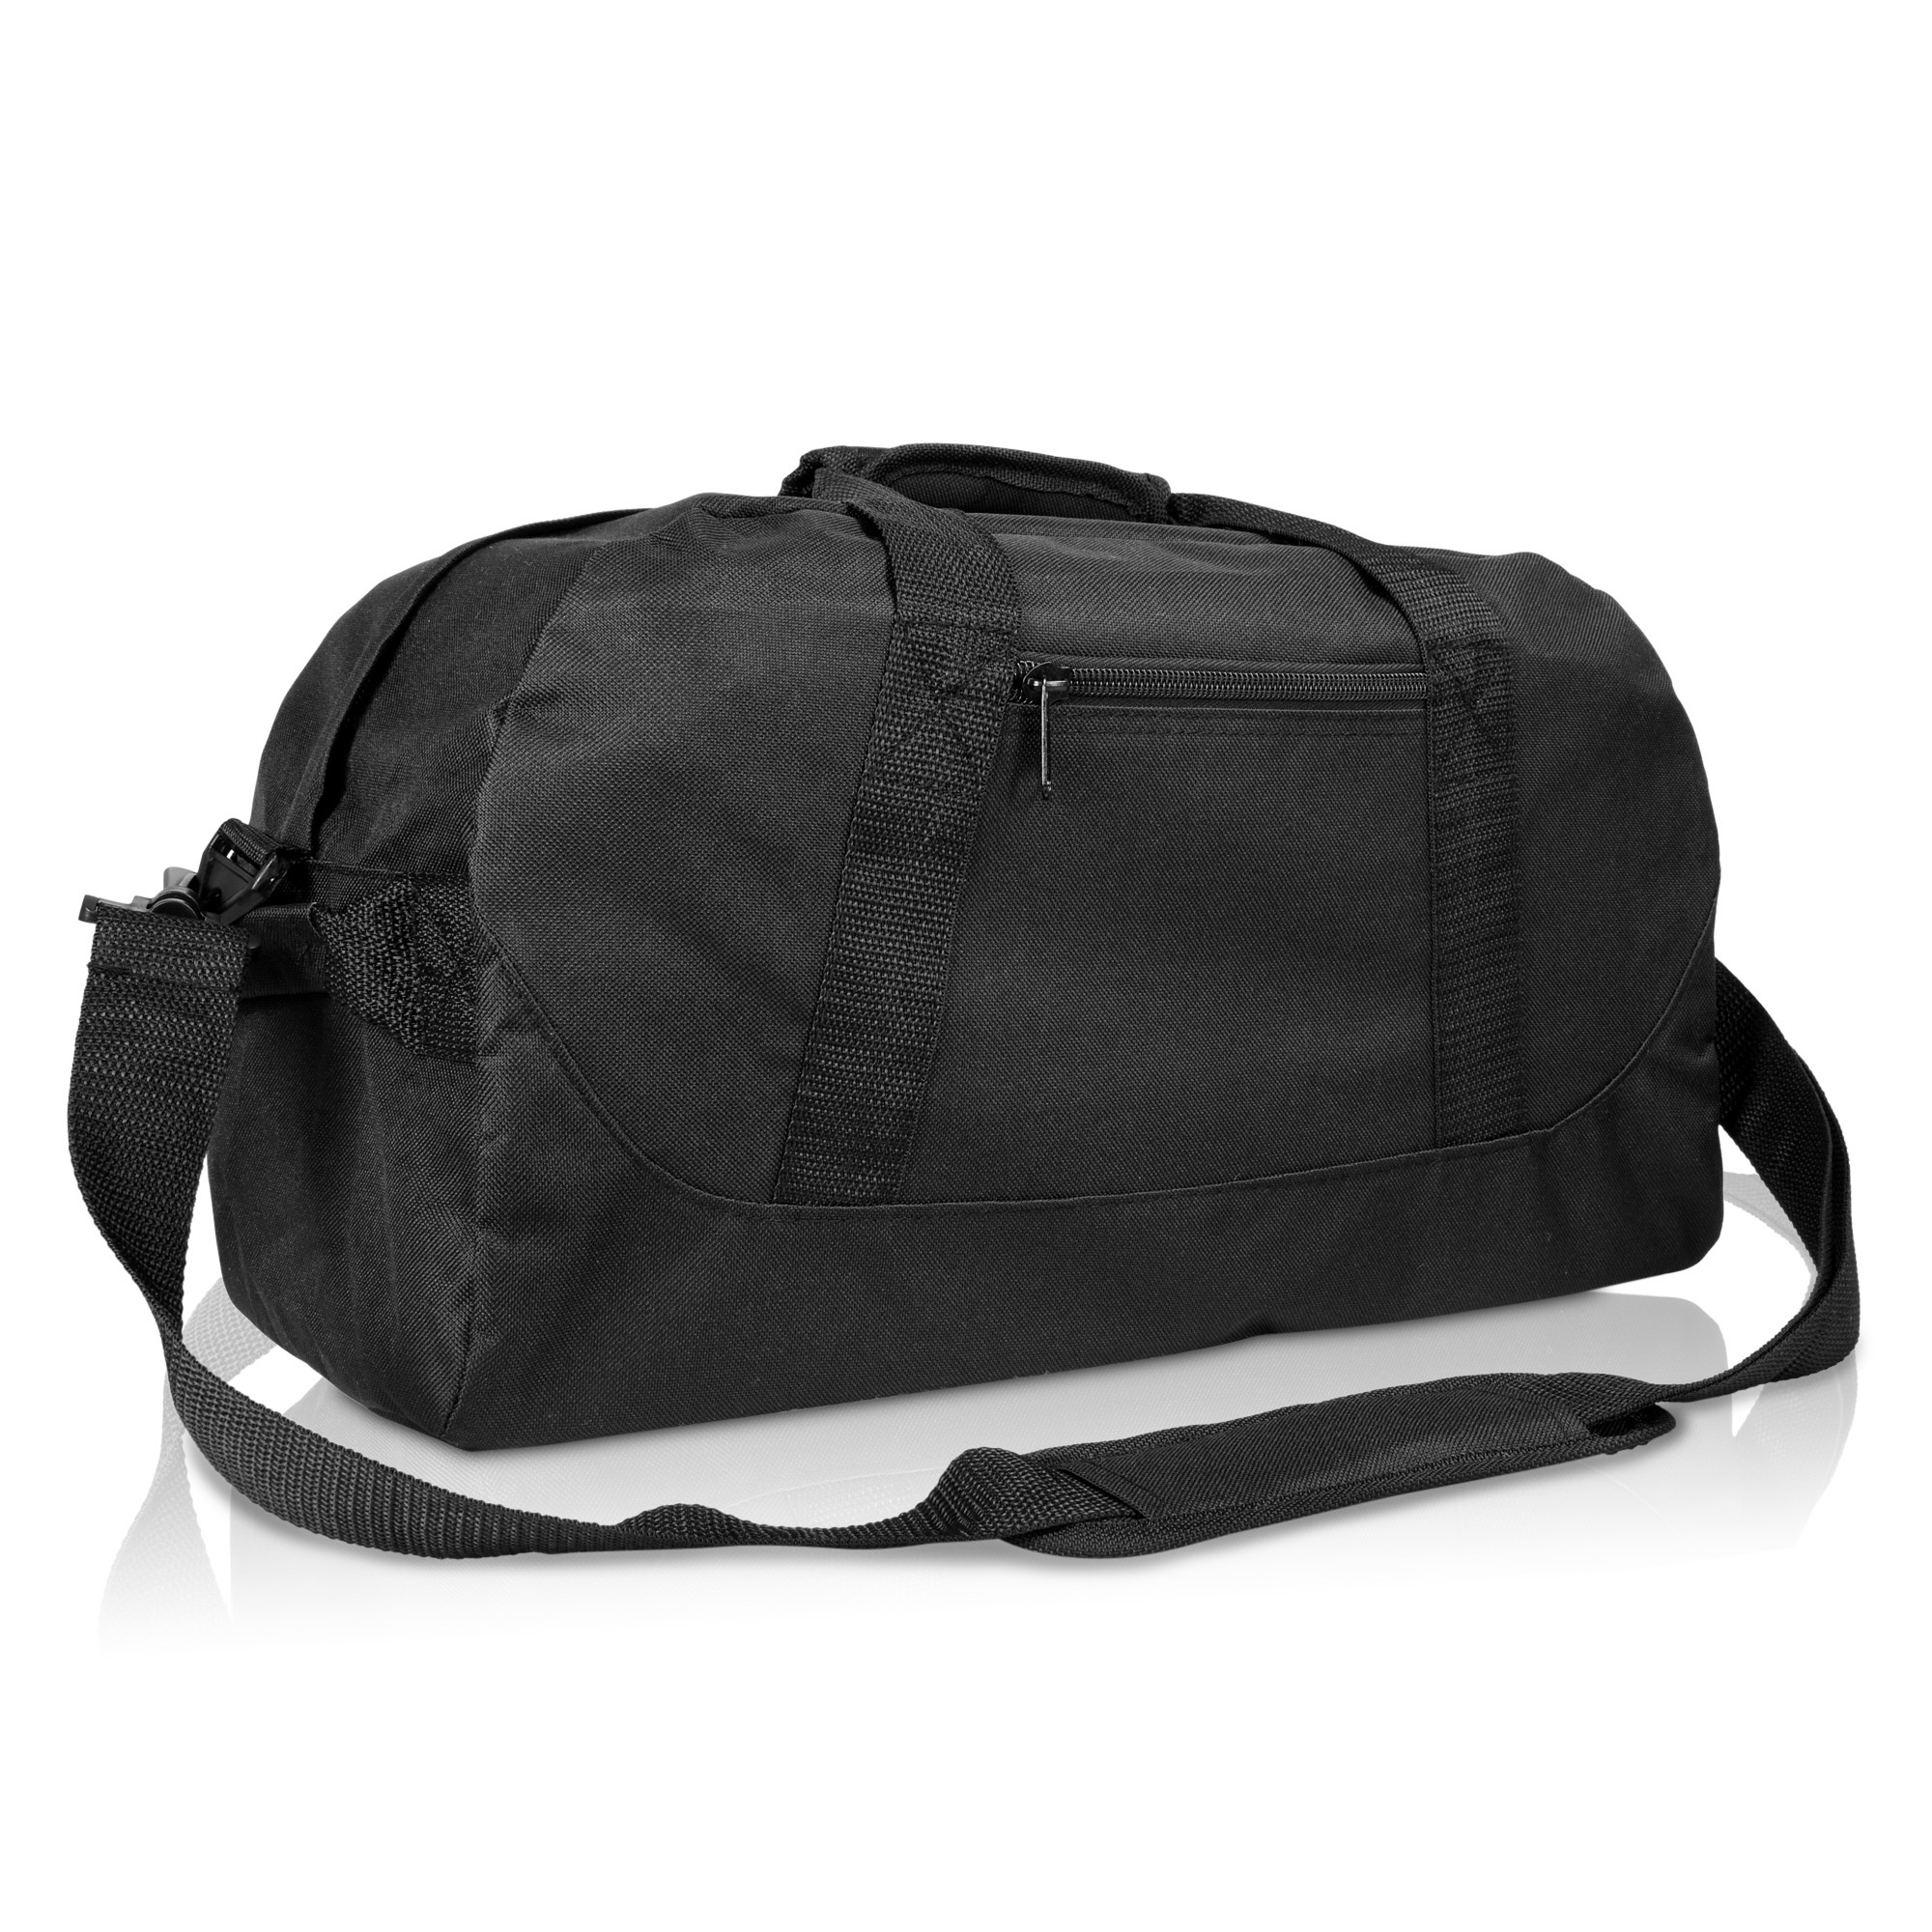 DALIX 18" Duffle Bag Two-Tone Sports Travel Gym Luggage Bag in Black - image 3 of 5